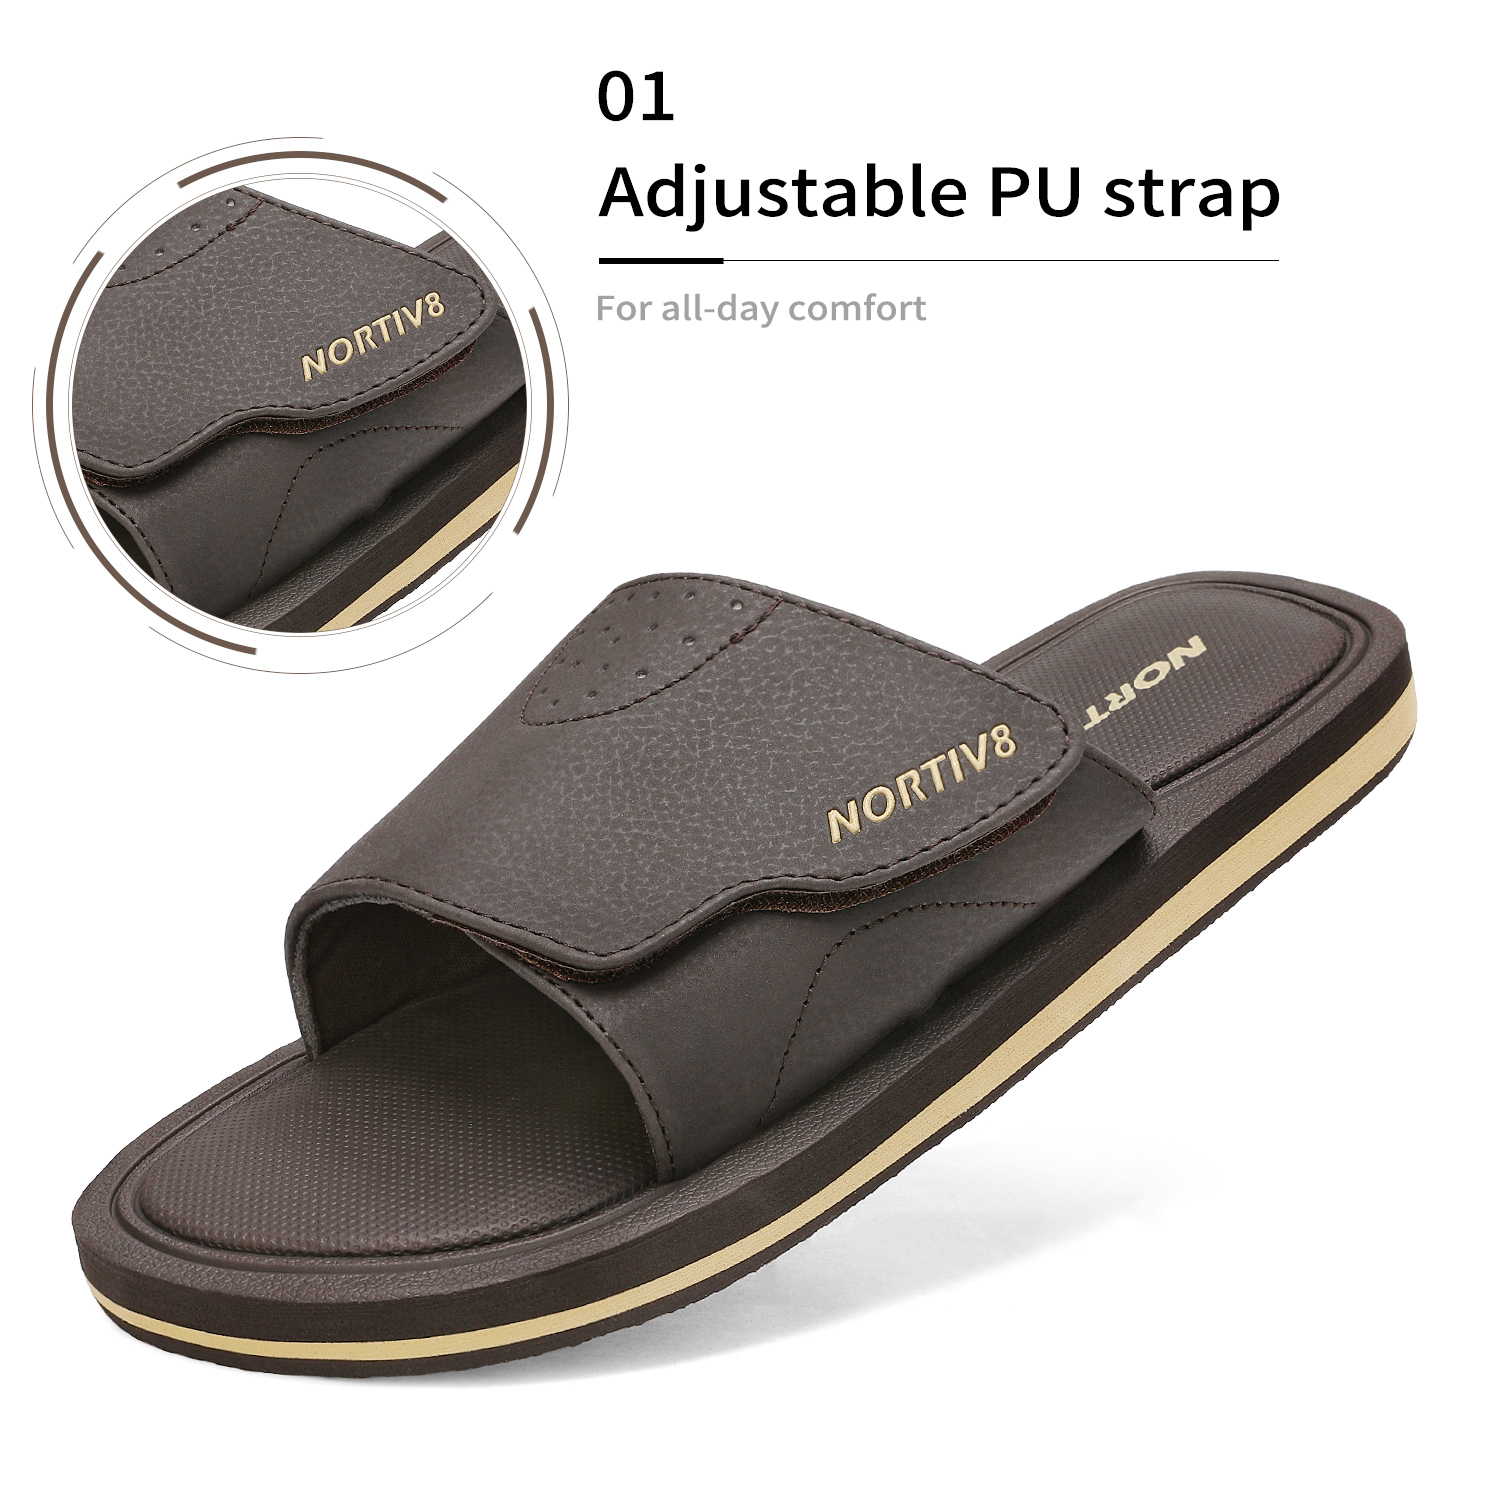 Nortiv 8 Men's Memory Foam Adjustable Slide Sandals Comfort Lightweight Beach Shoes Summer Outdoor Slipper Fusion Dark/Brown Size 15 - image 4 of 5